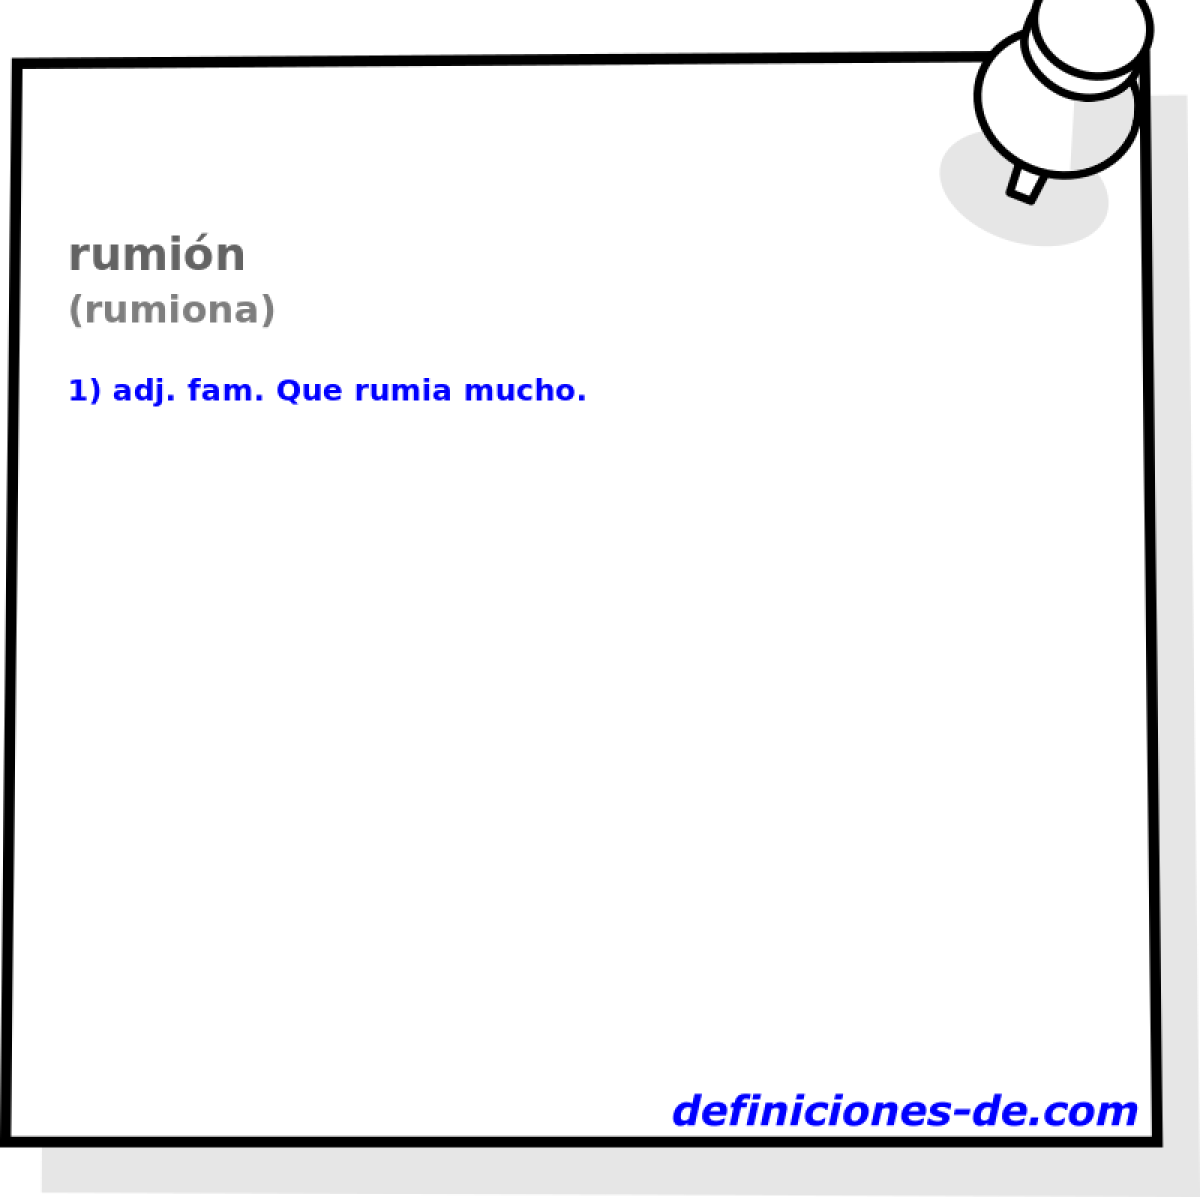 rumin (rumiona)